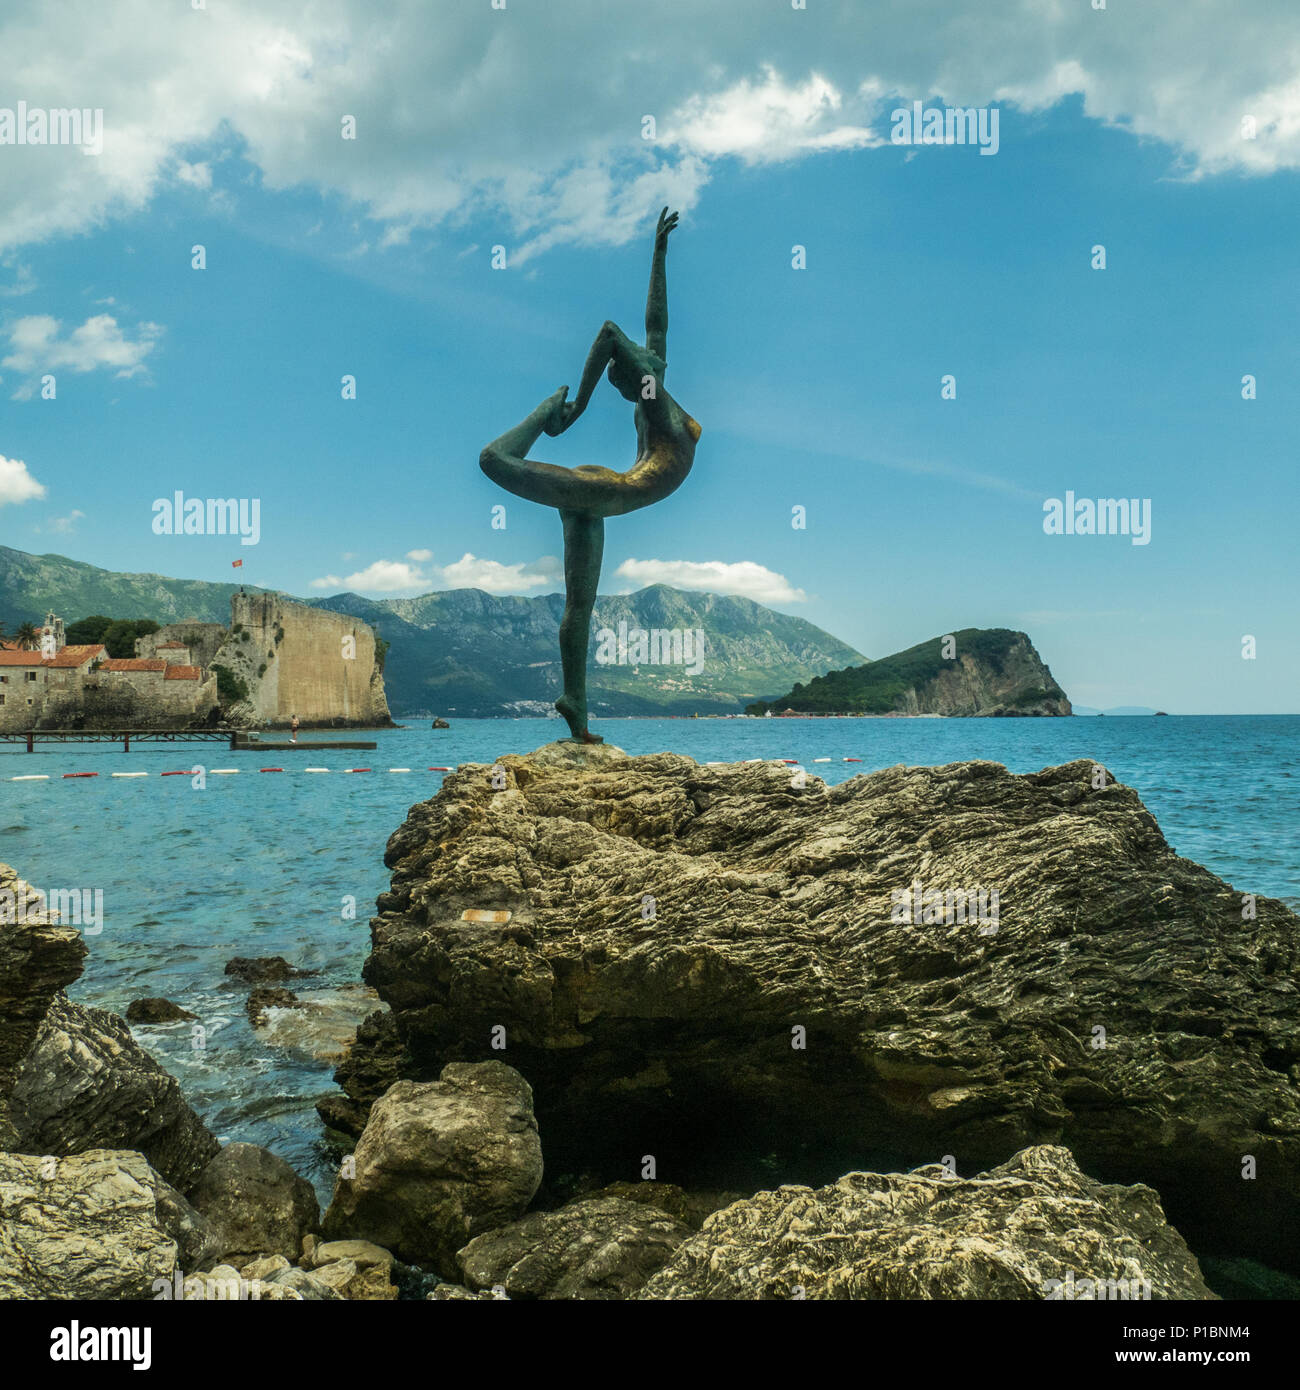 La escultura 'bailarina de Budva' o 'gimnasta de Budva' en Budva, una ciudad en la costa adriática de Montenegro Foto de stock